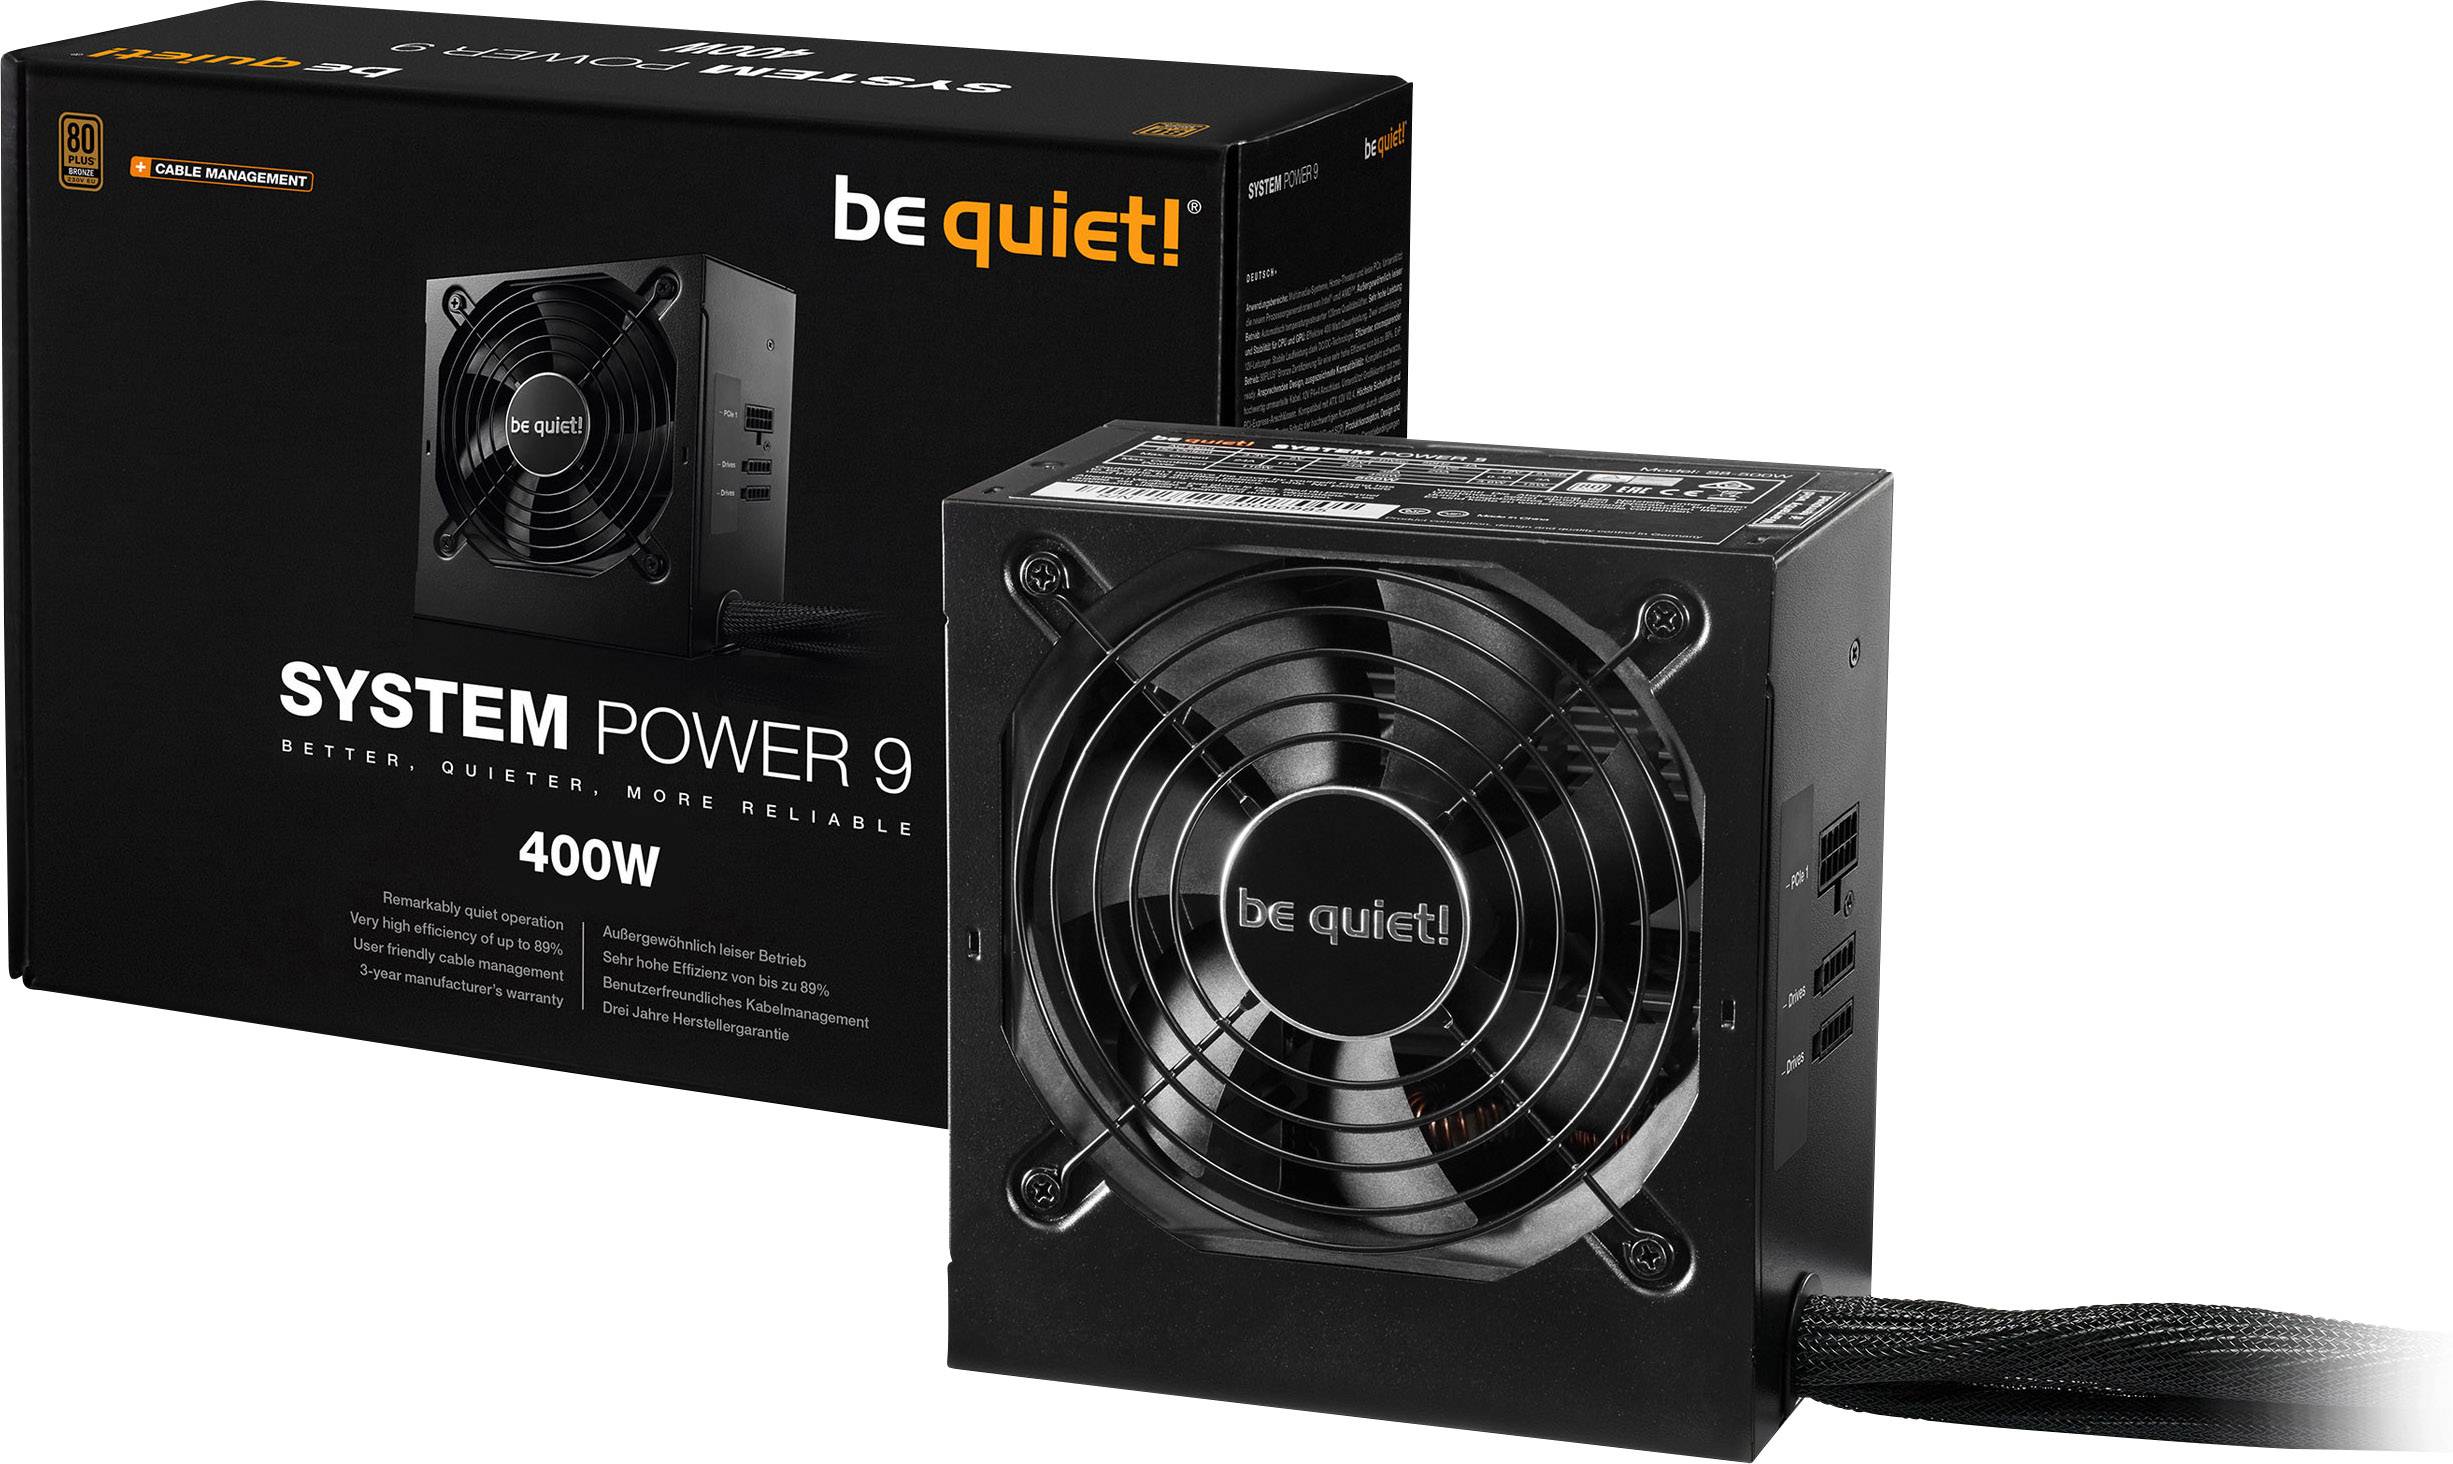 BE QUIET quietI System Power 9 CM 400W ATX24